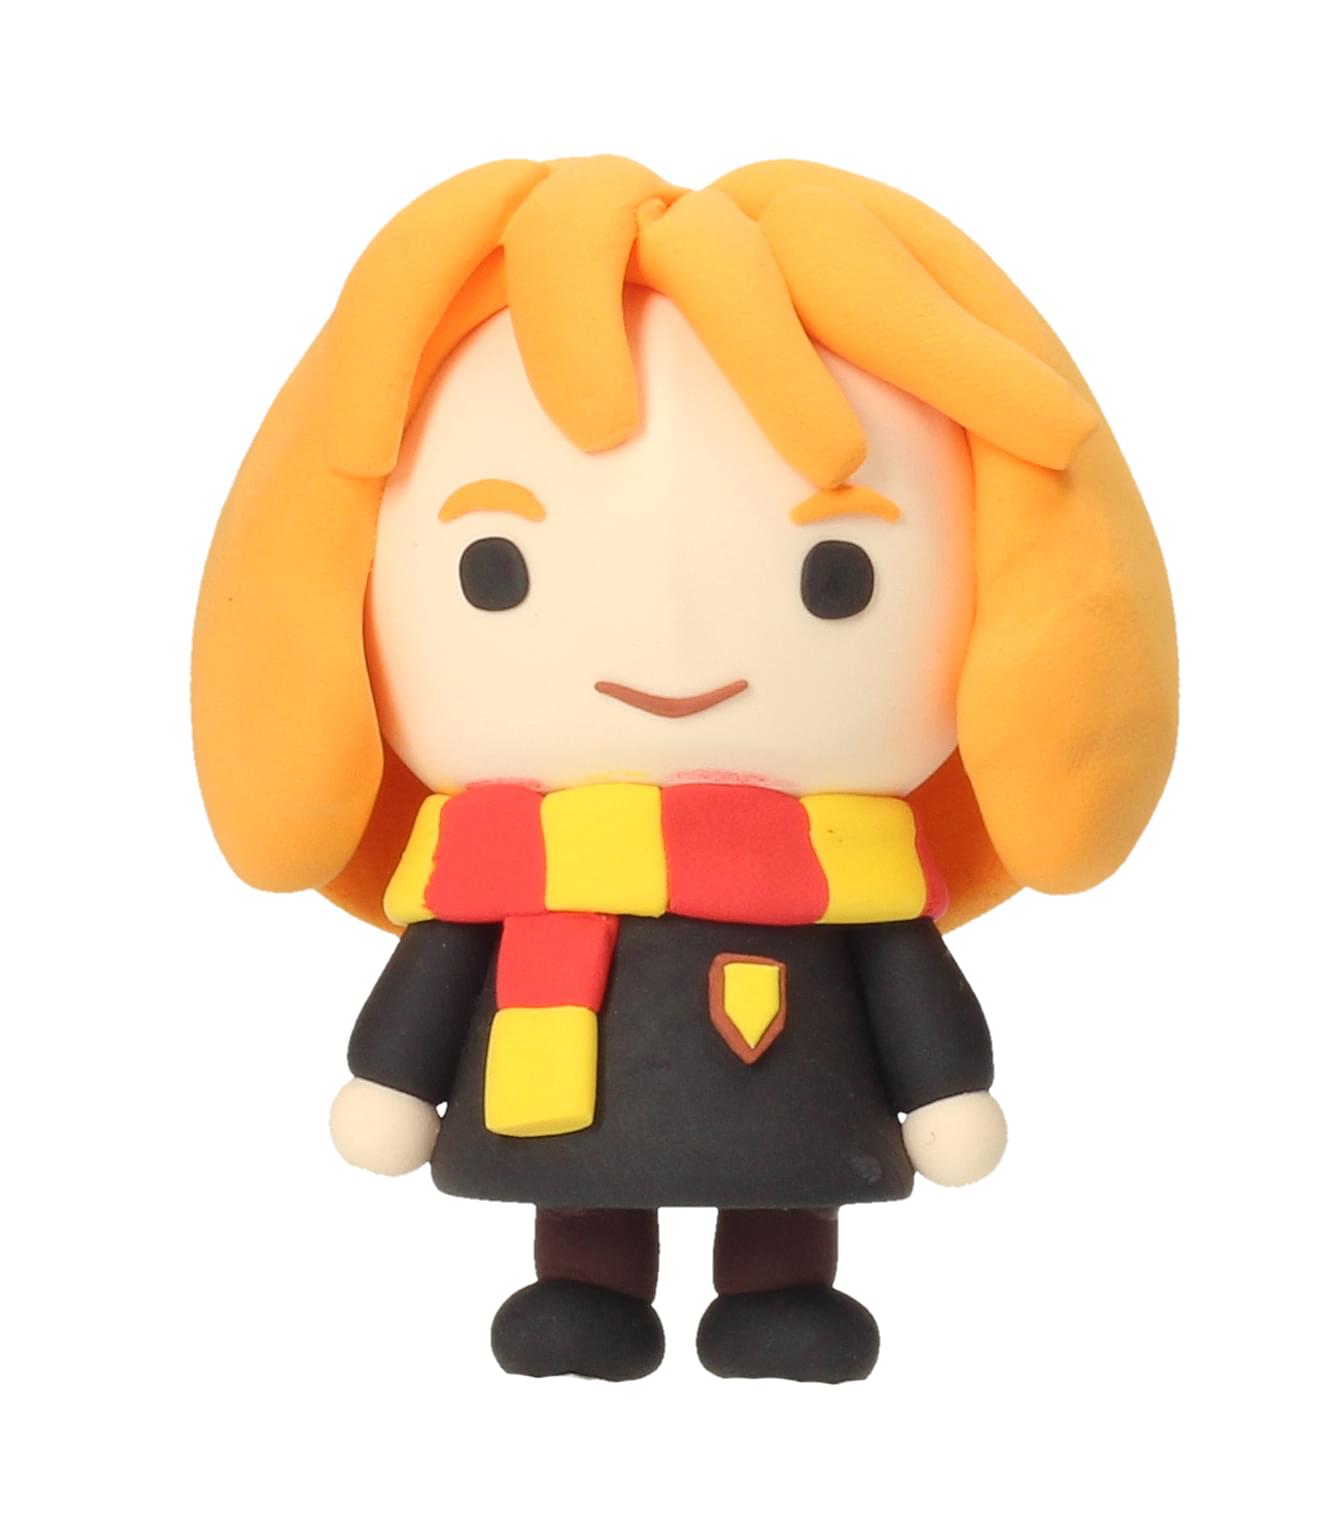 Harry Potter Do-It-Yourself Super Dough Modeling Set | Hermione Granger